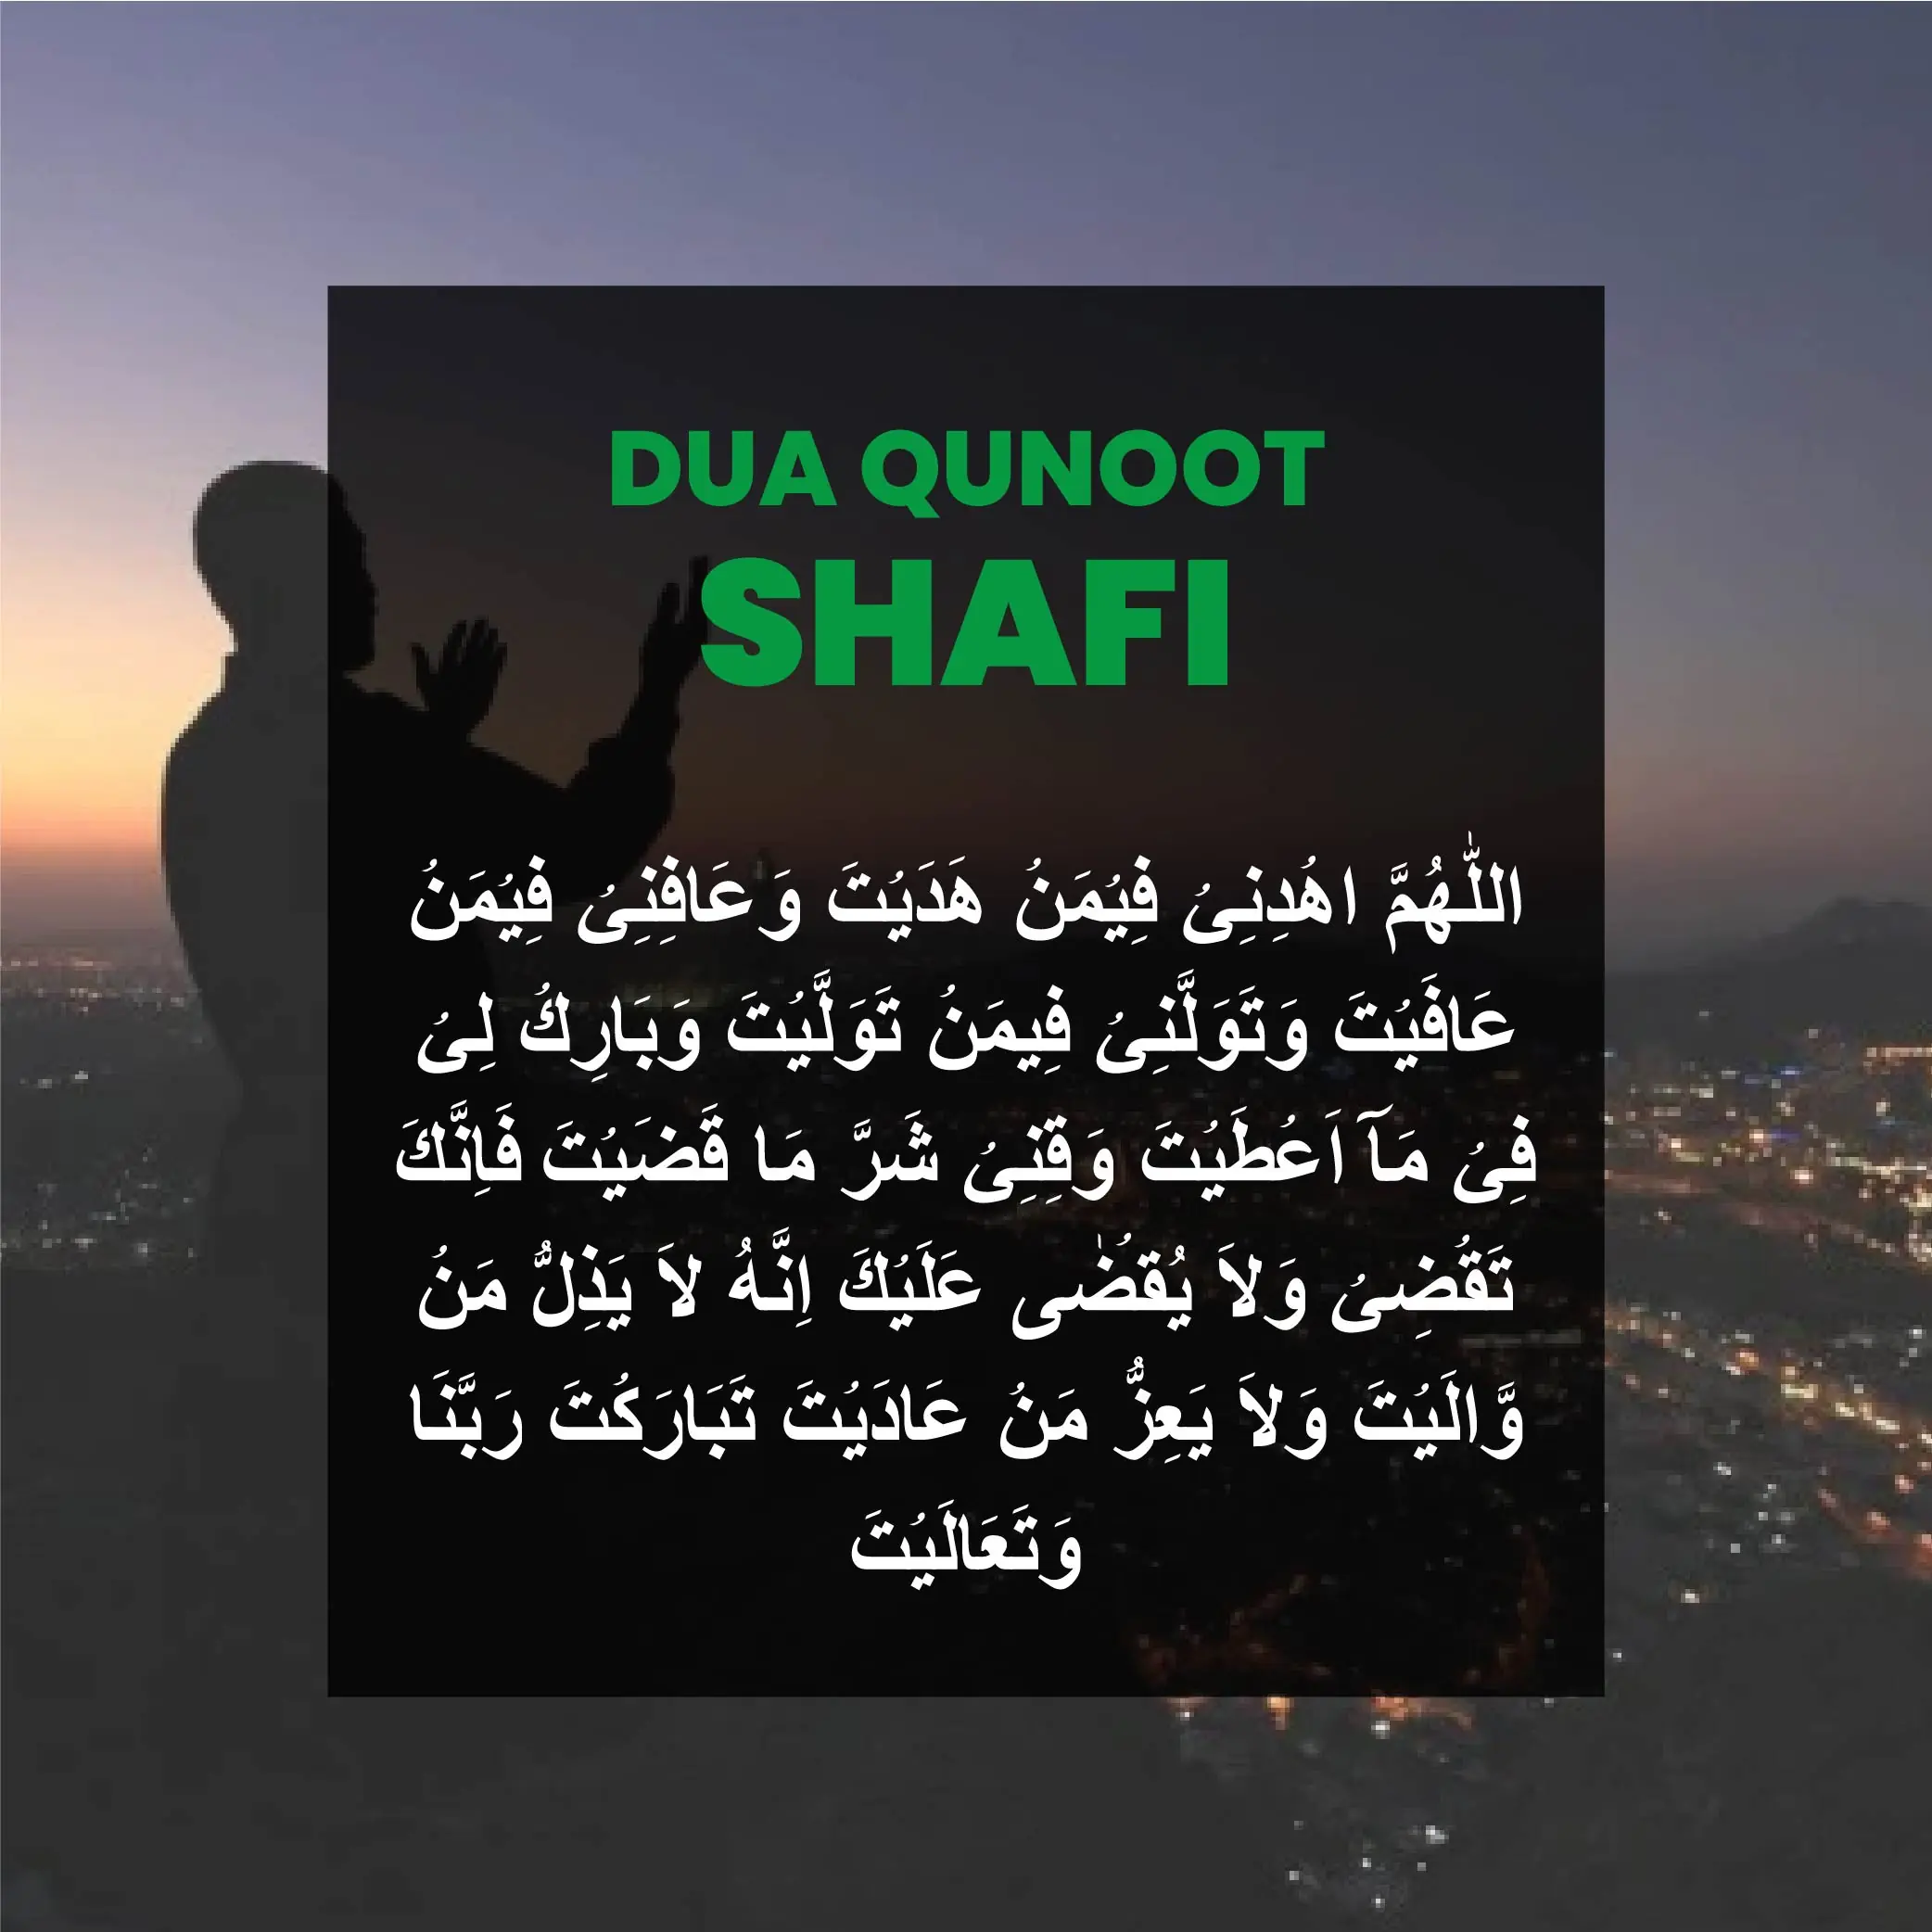 Dua Qunoot Shafi with translation